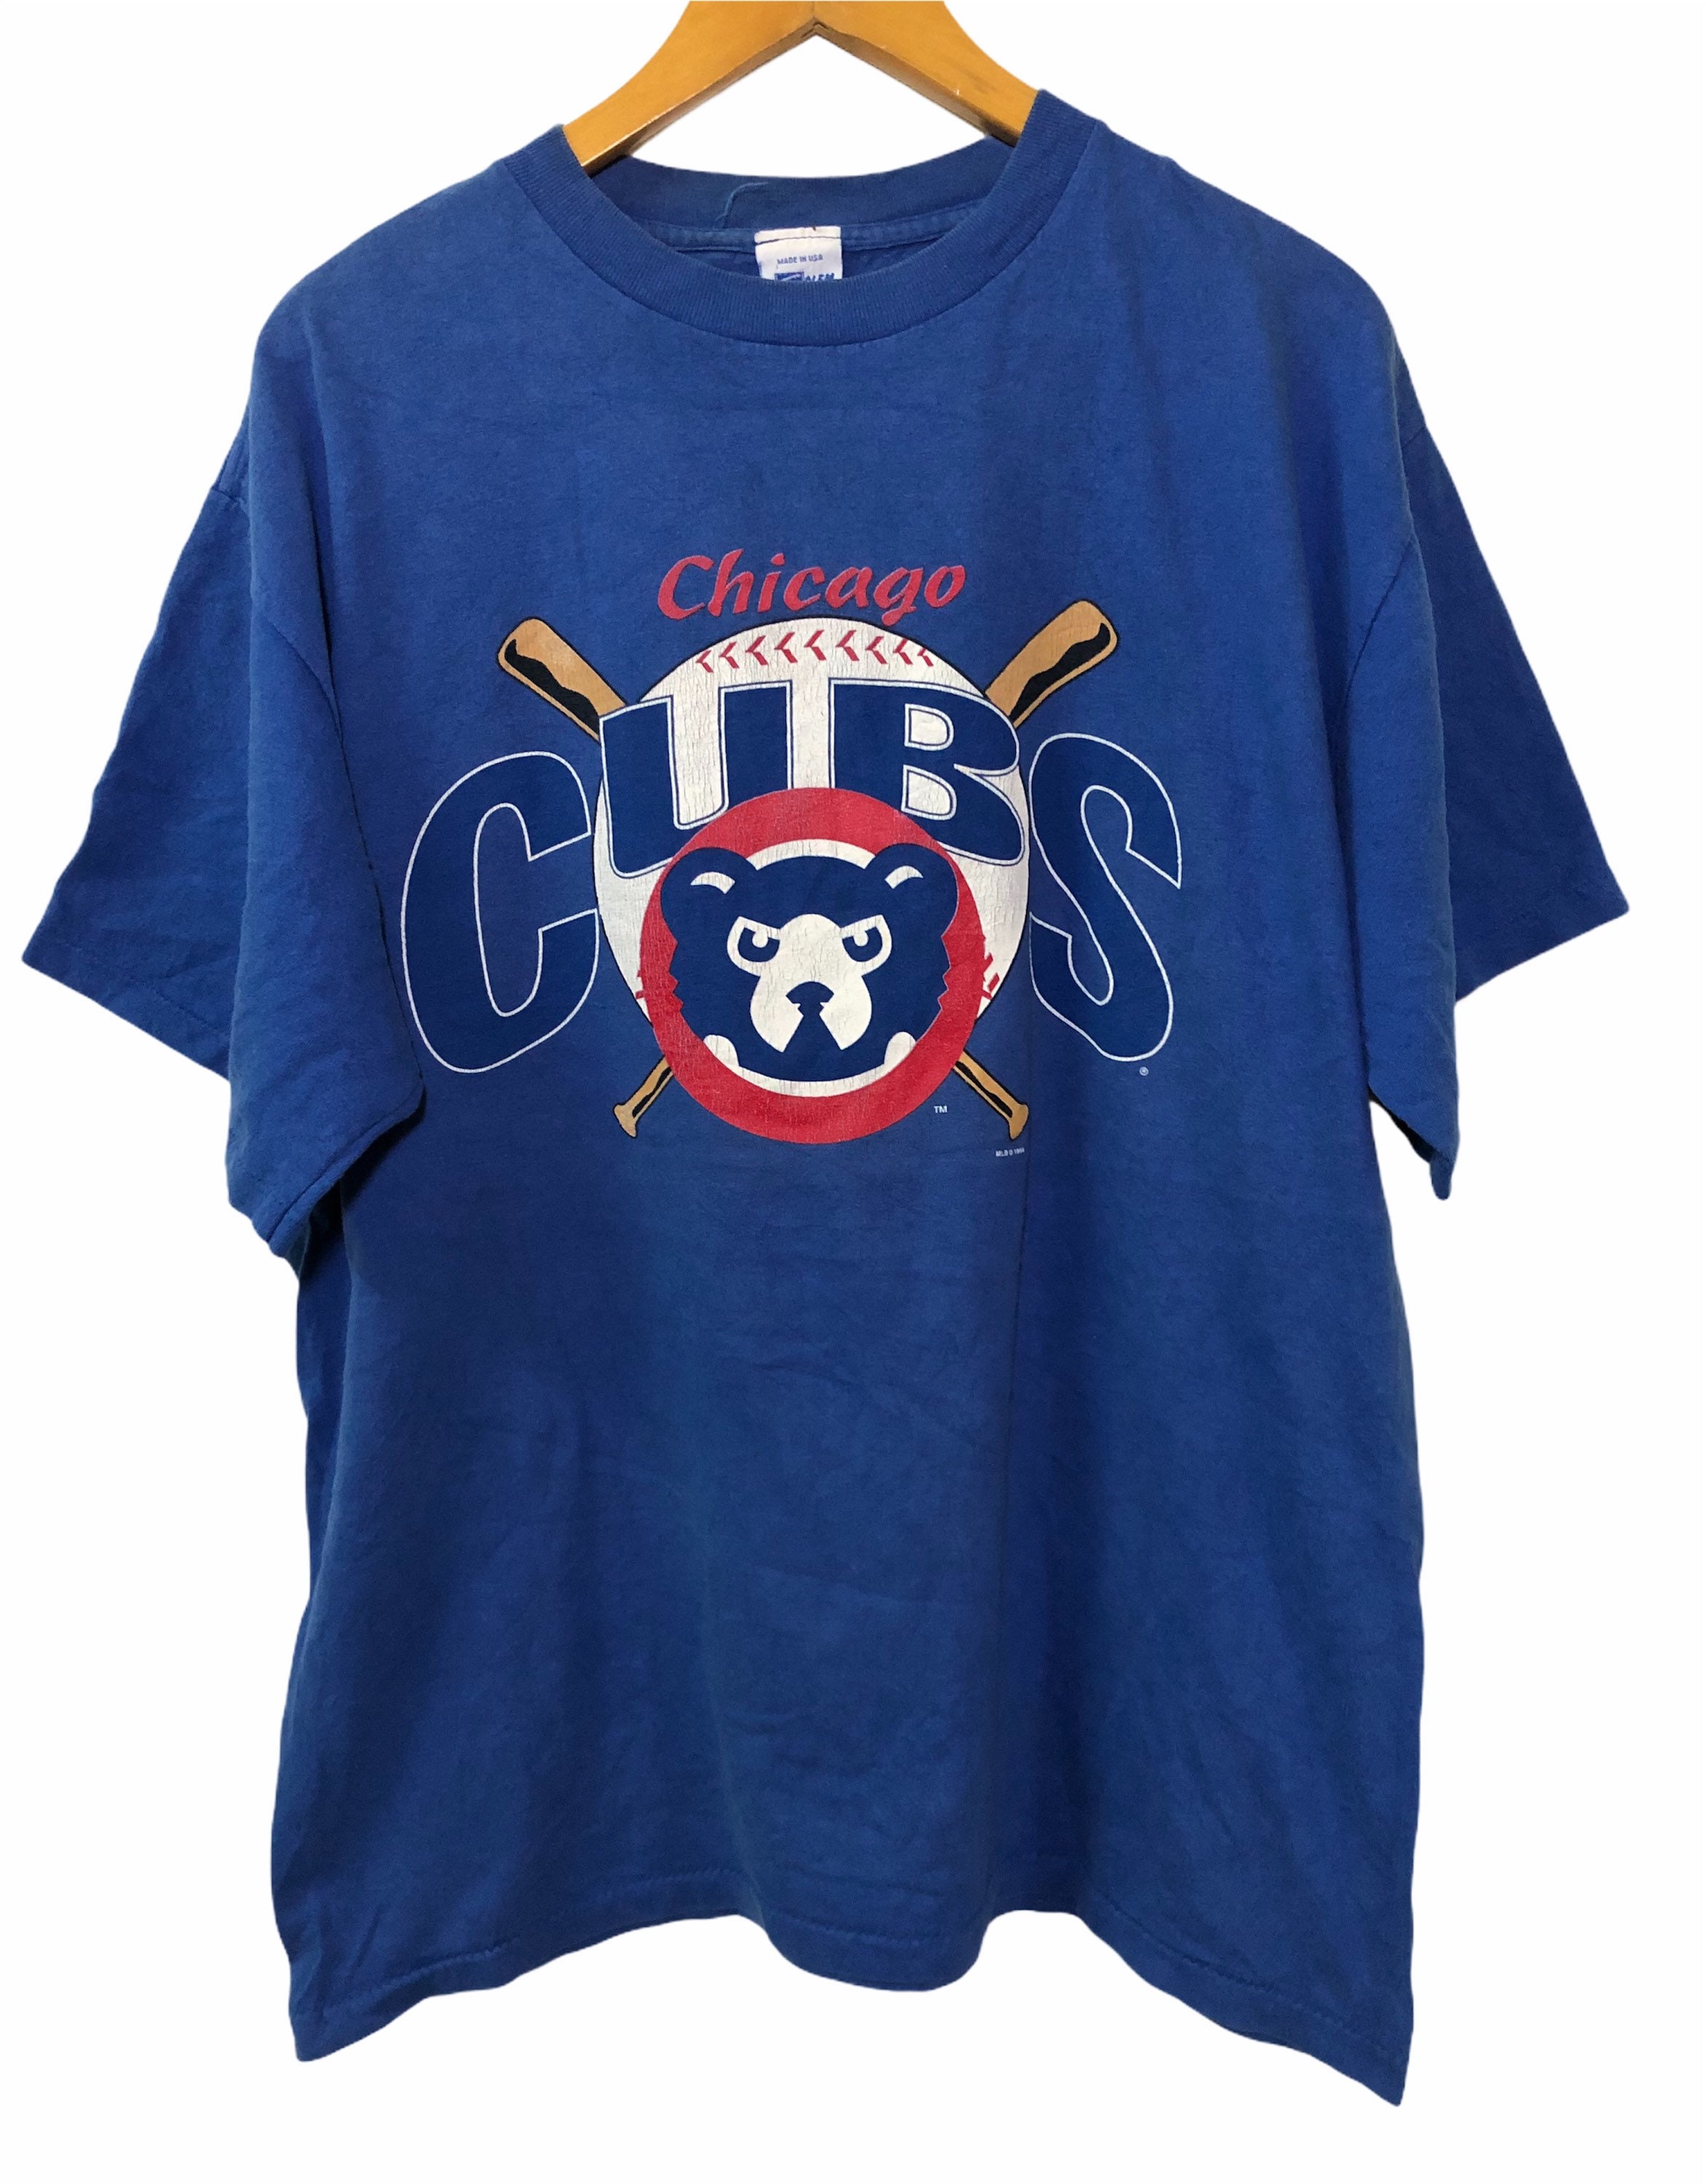 Vintage 90s The Chicago Cubs Mbl Baseball T Shirt Large Size